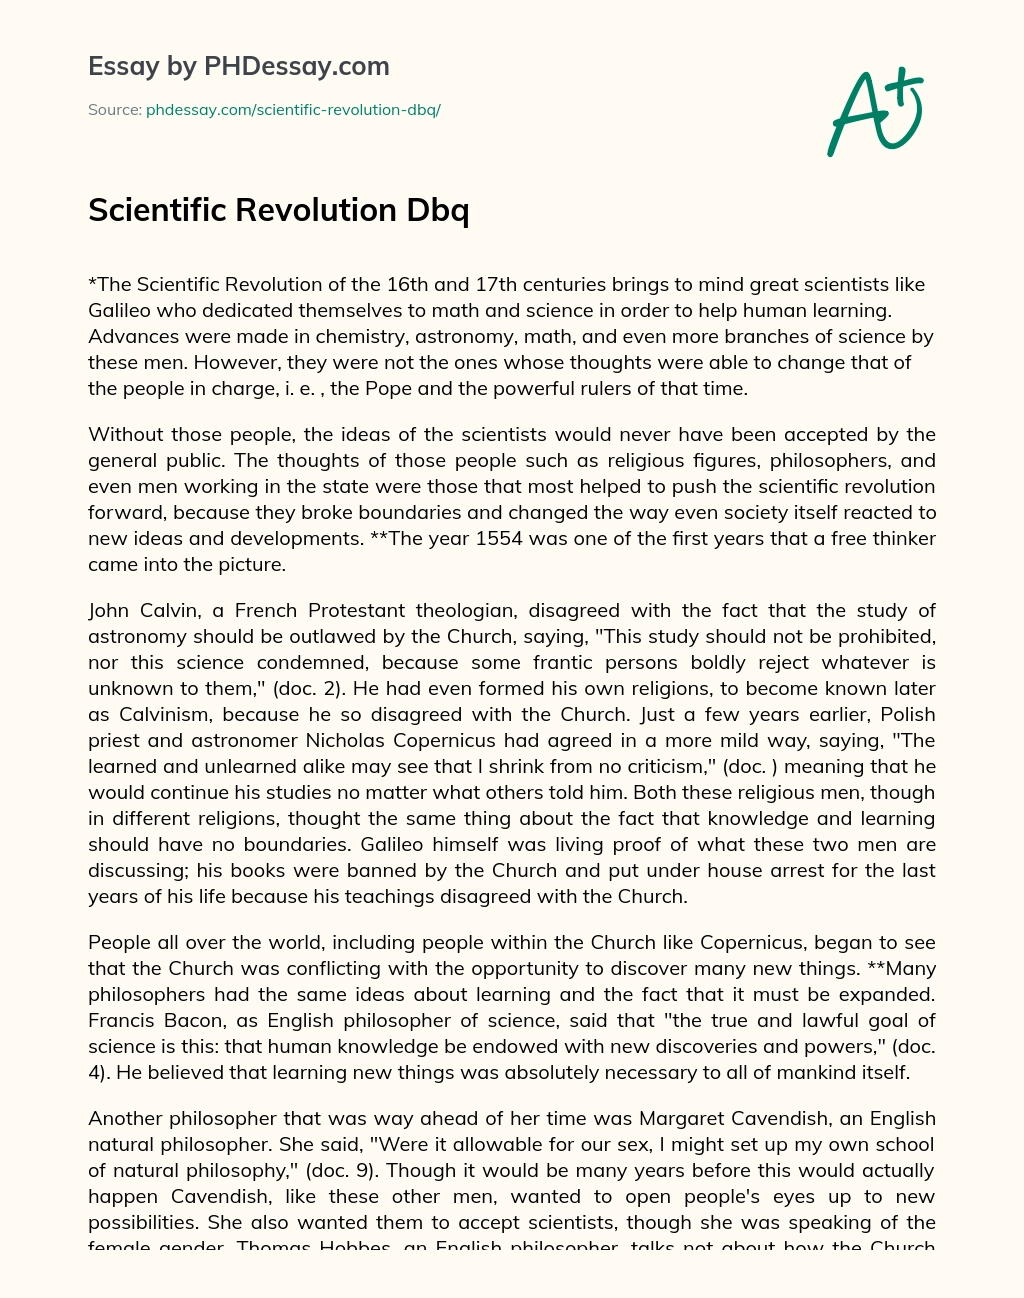 Scientific Revolution Dbq essay